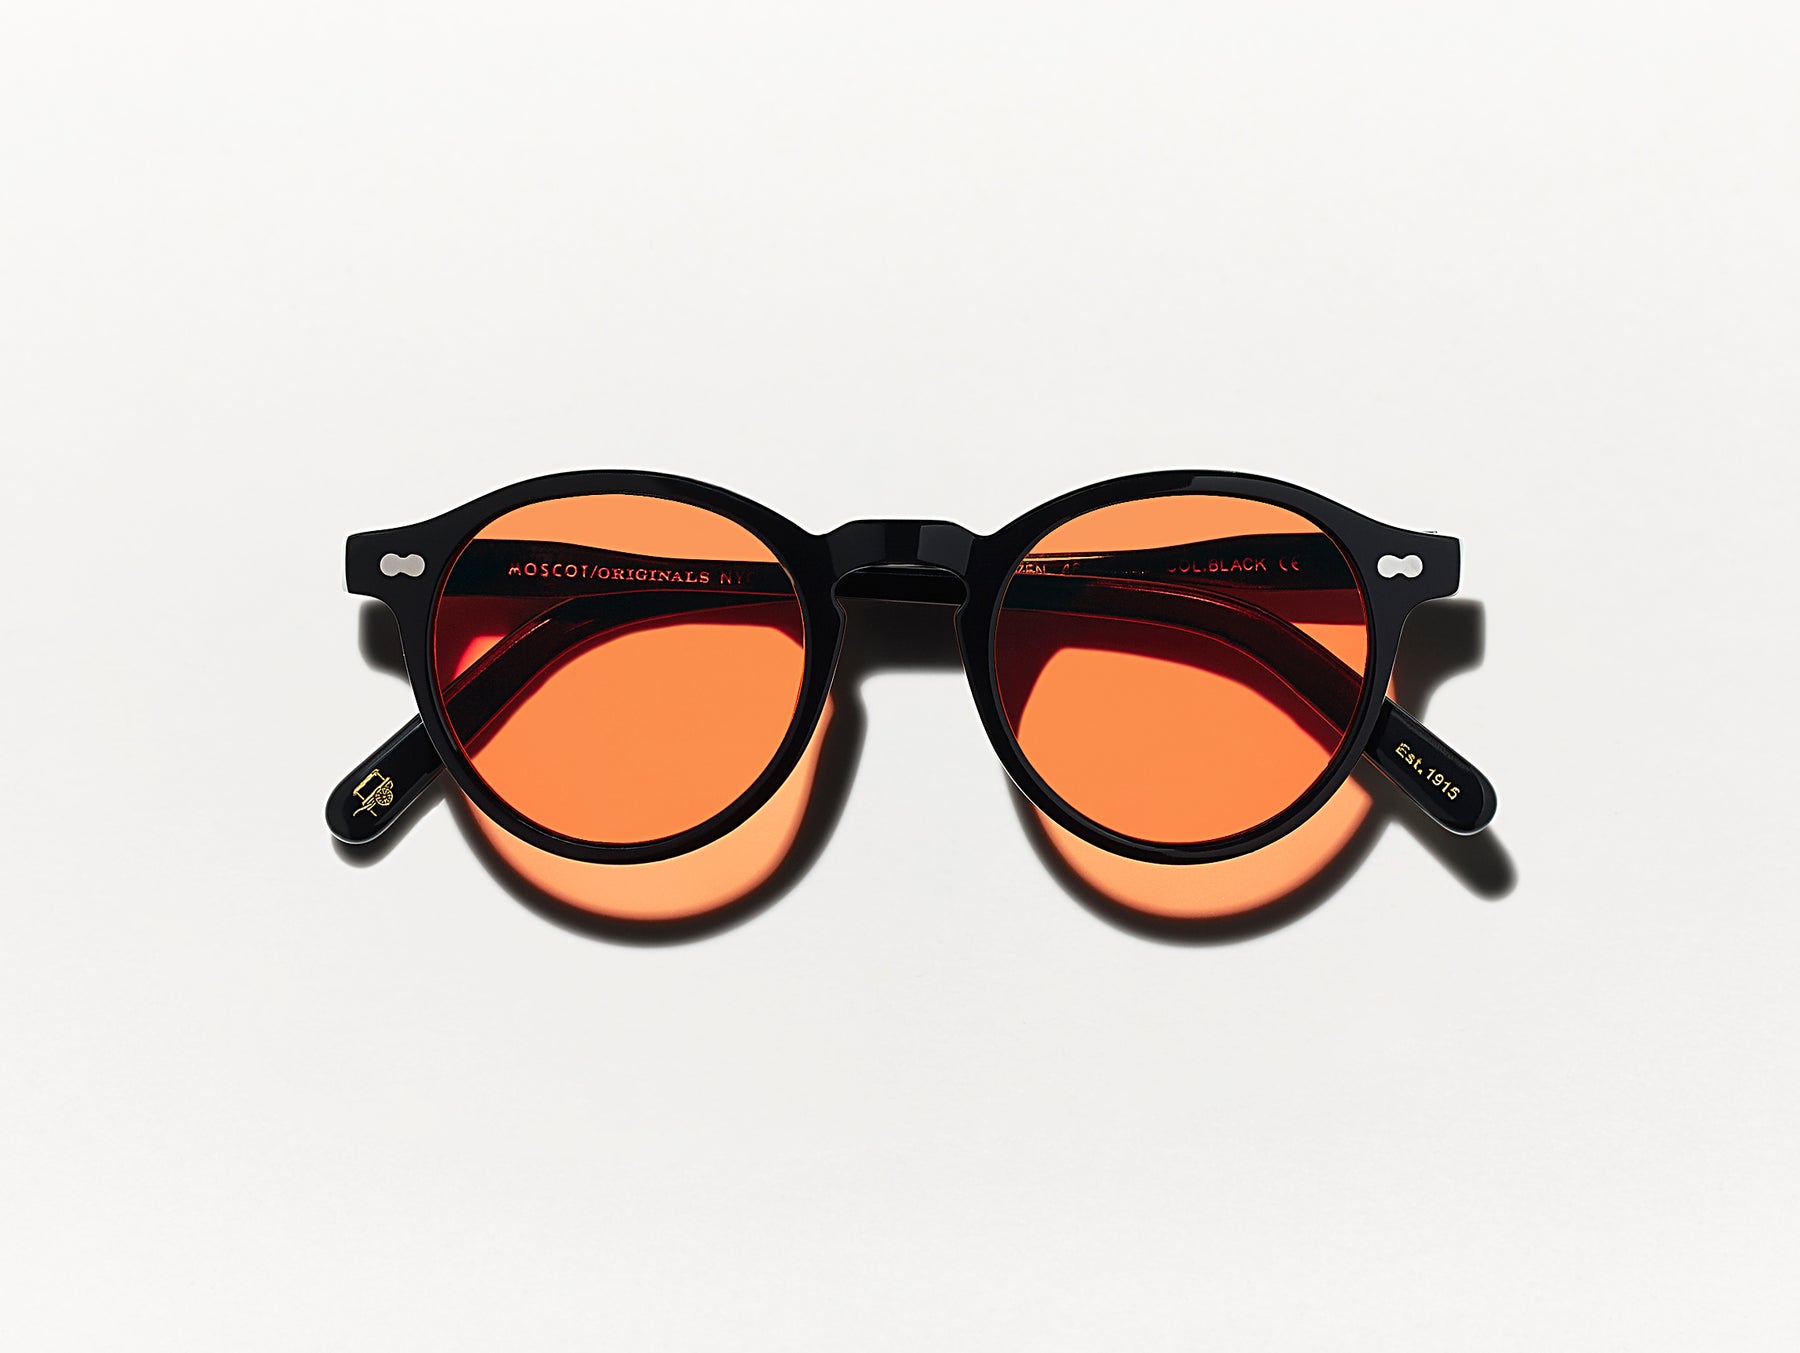 The MILTZEN Black with Woodstock Orange Tinted Lenses